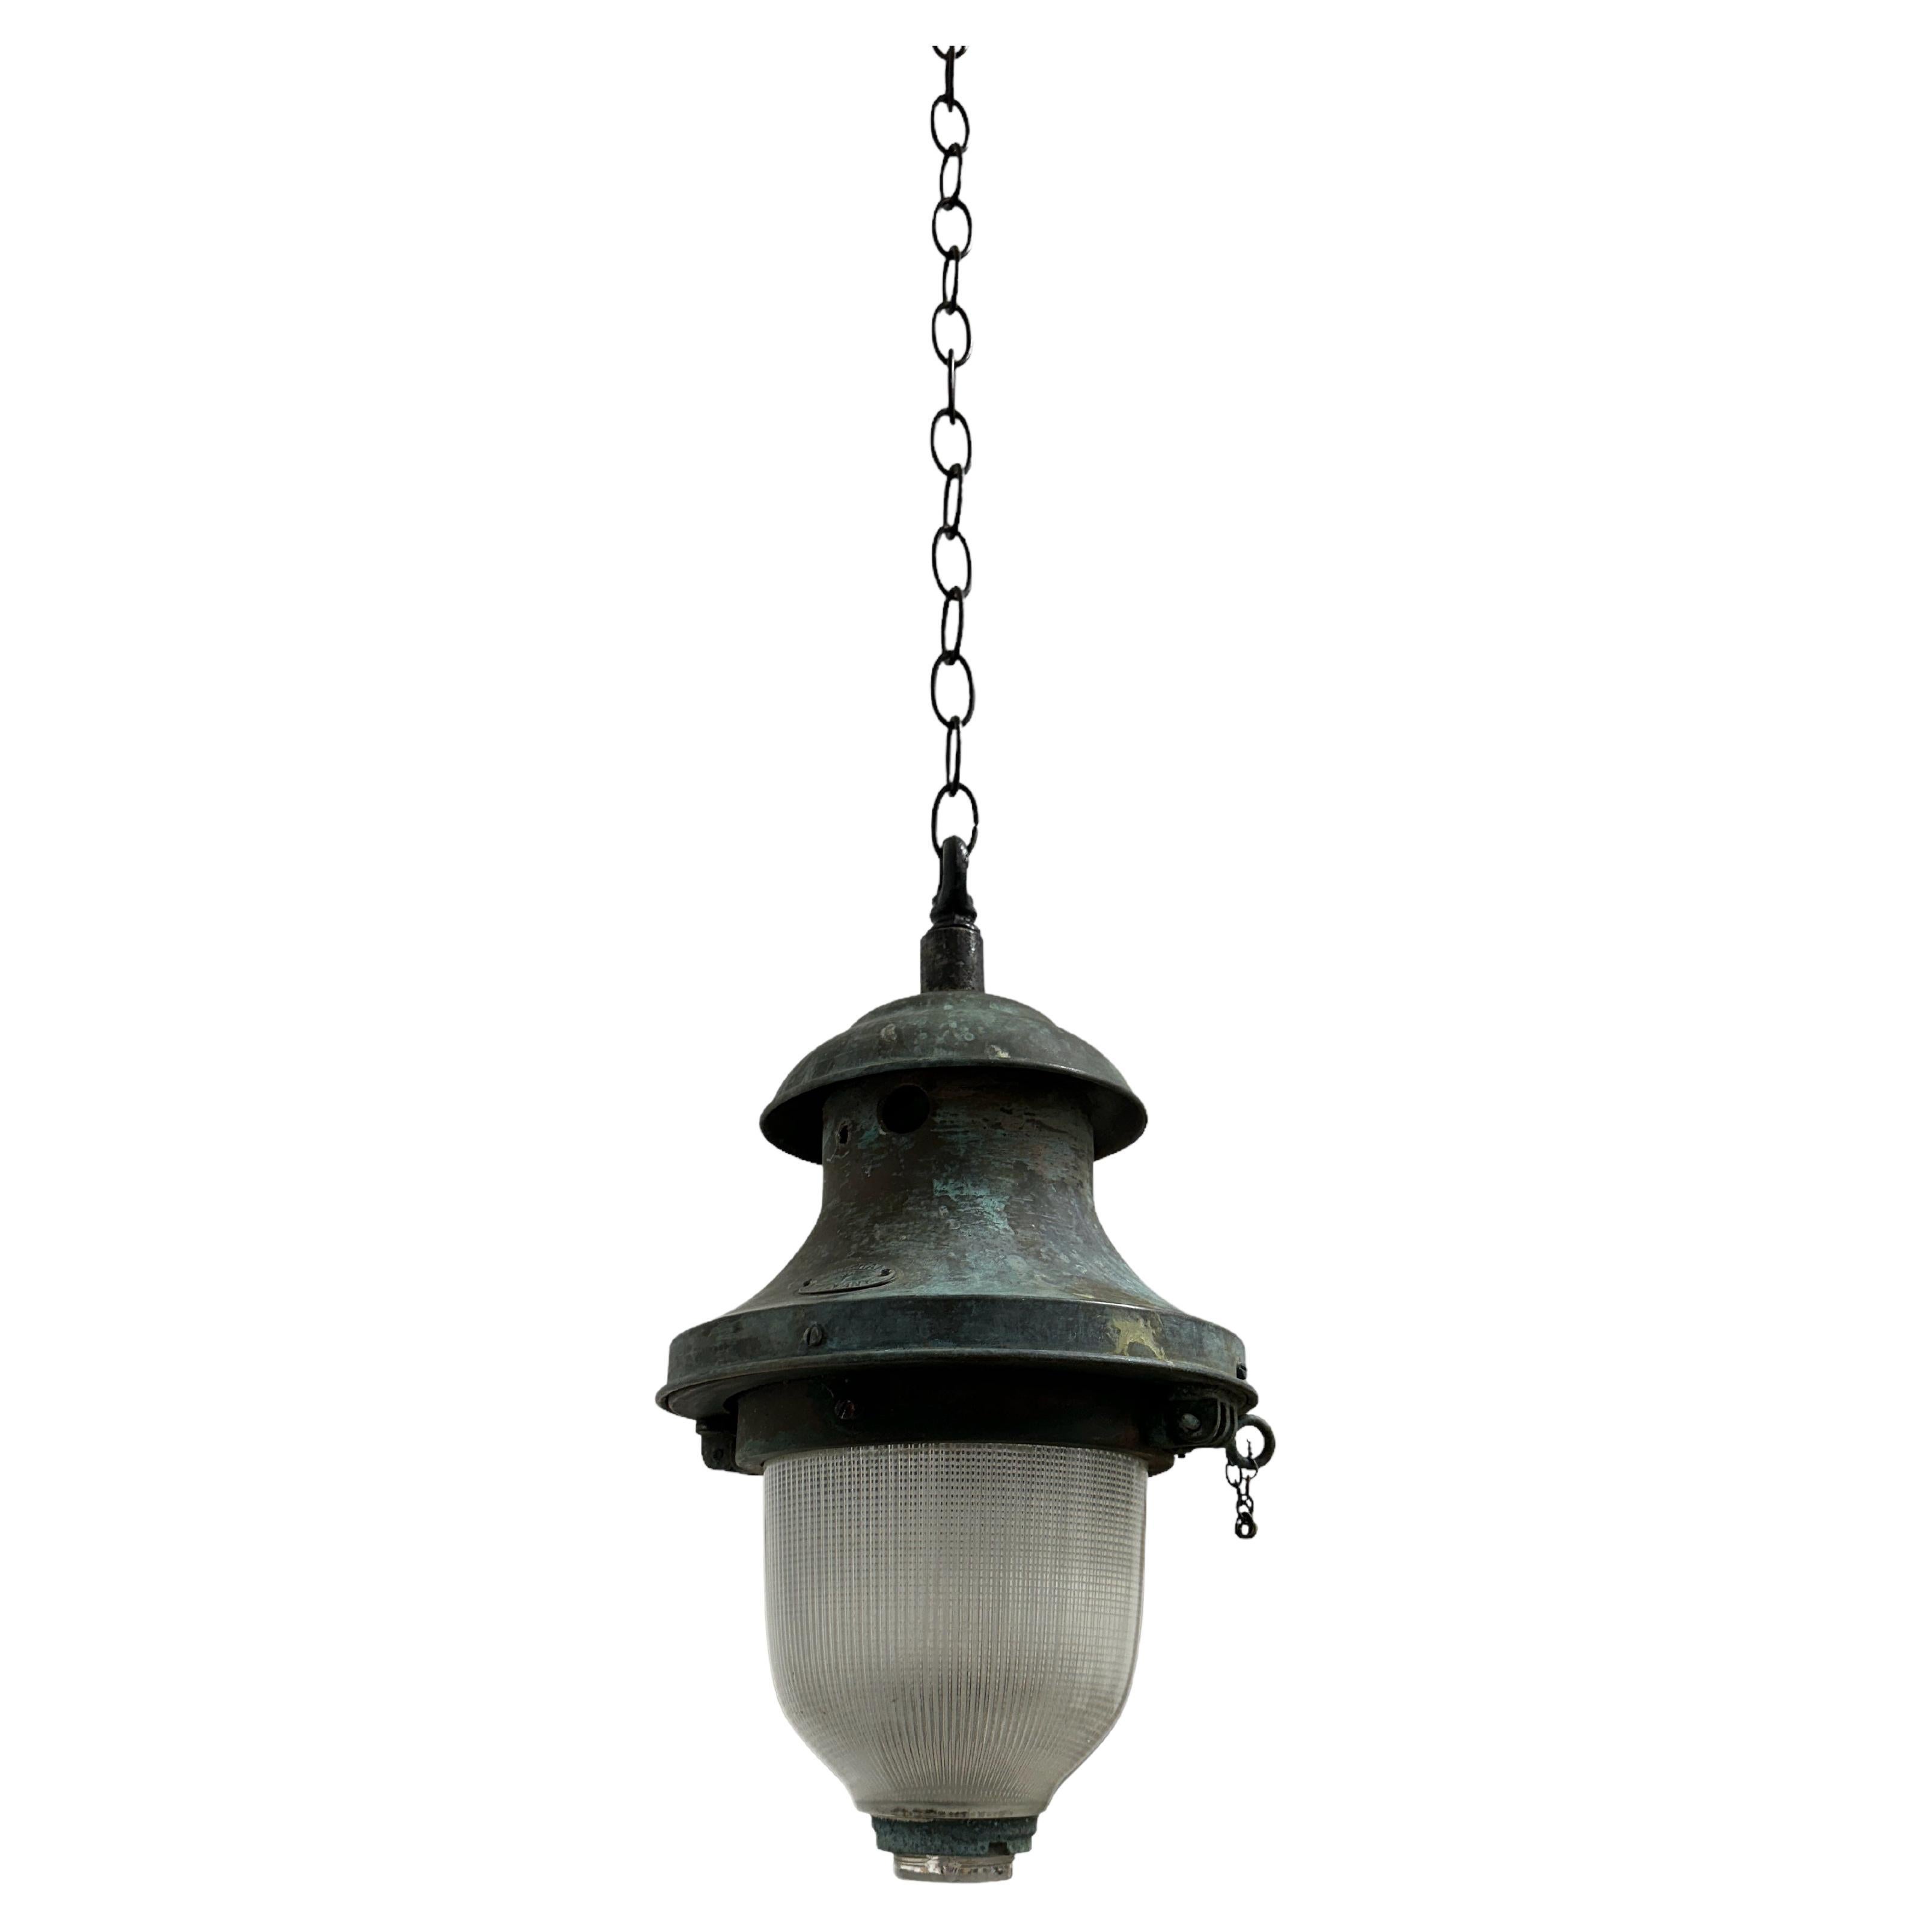 Antique Industrial French Holophane Devant Ceiling Pendant Street Light Lamp For Sale